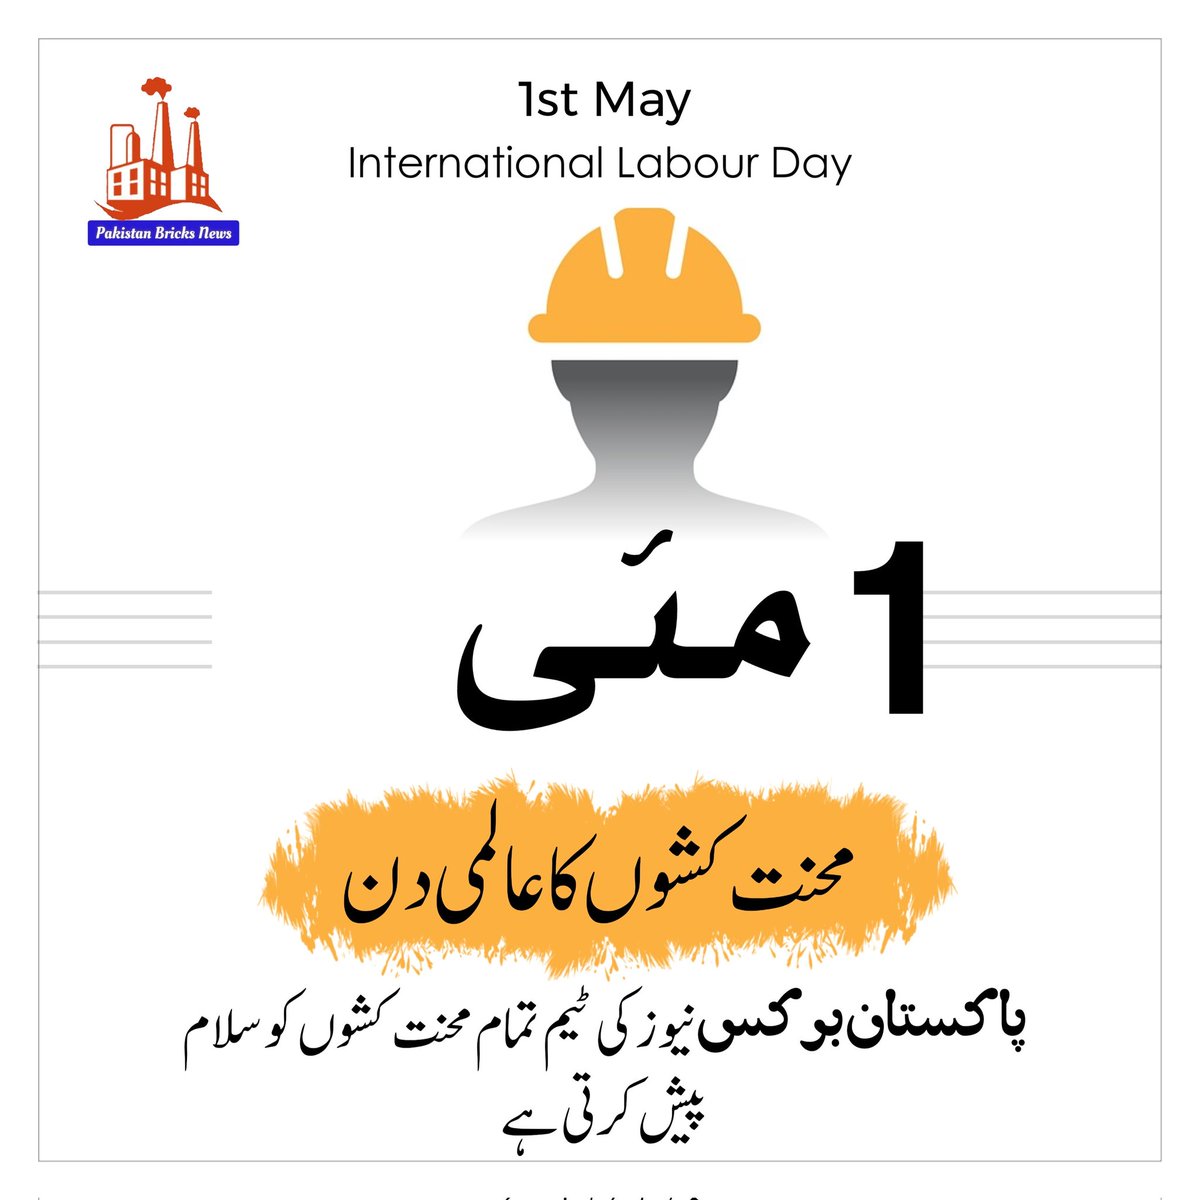 #1stMay #LabourDay #YoumEMazdoor #مزدور_ڈے #یوم_مزدور #pakistanbrickkiln #Pakistanredbrick #pbnews99 #pbnewe